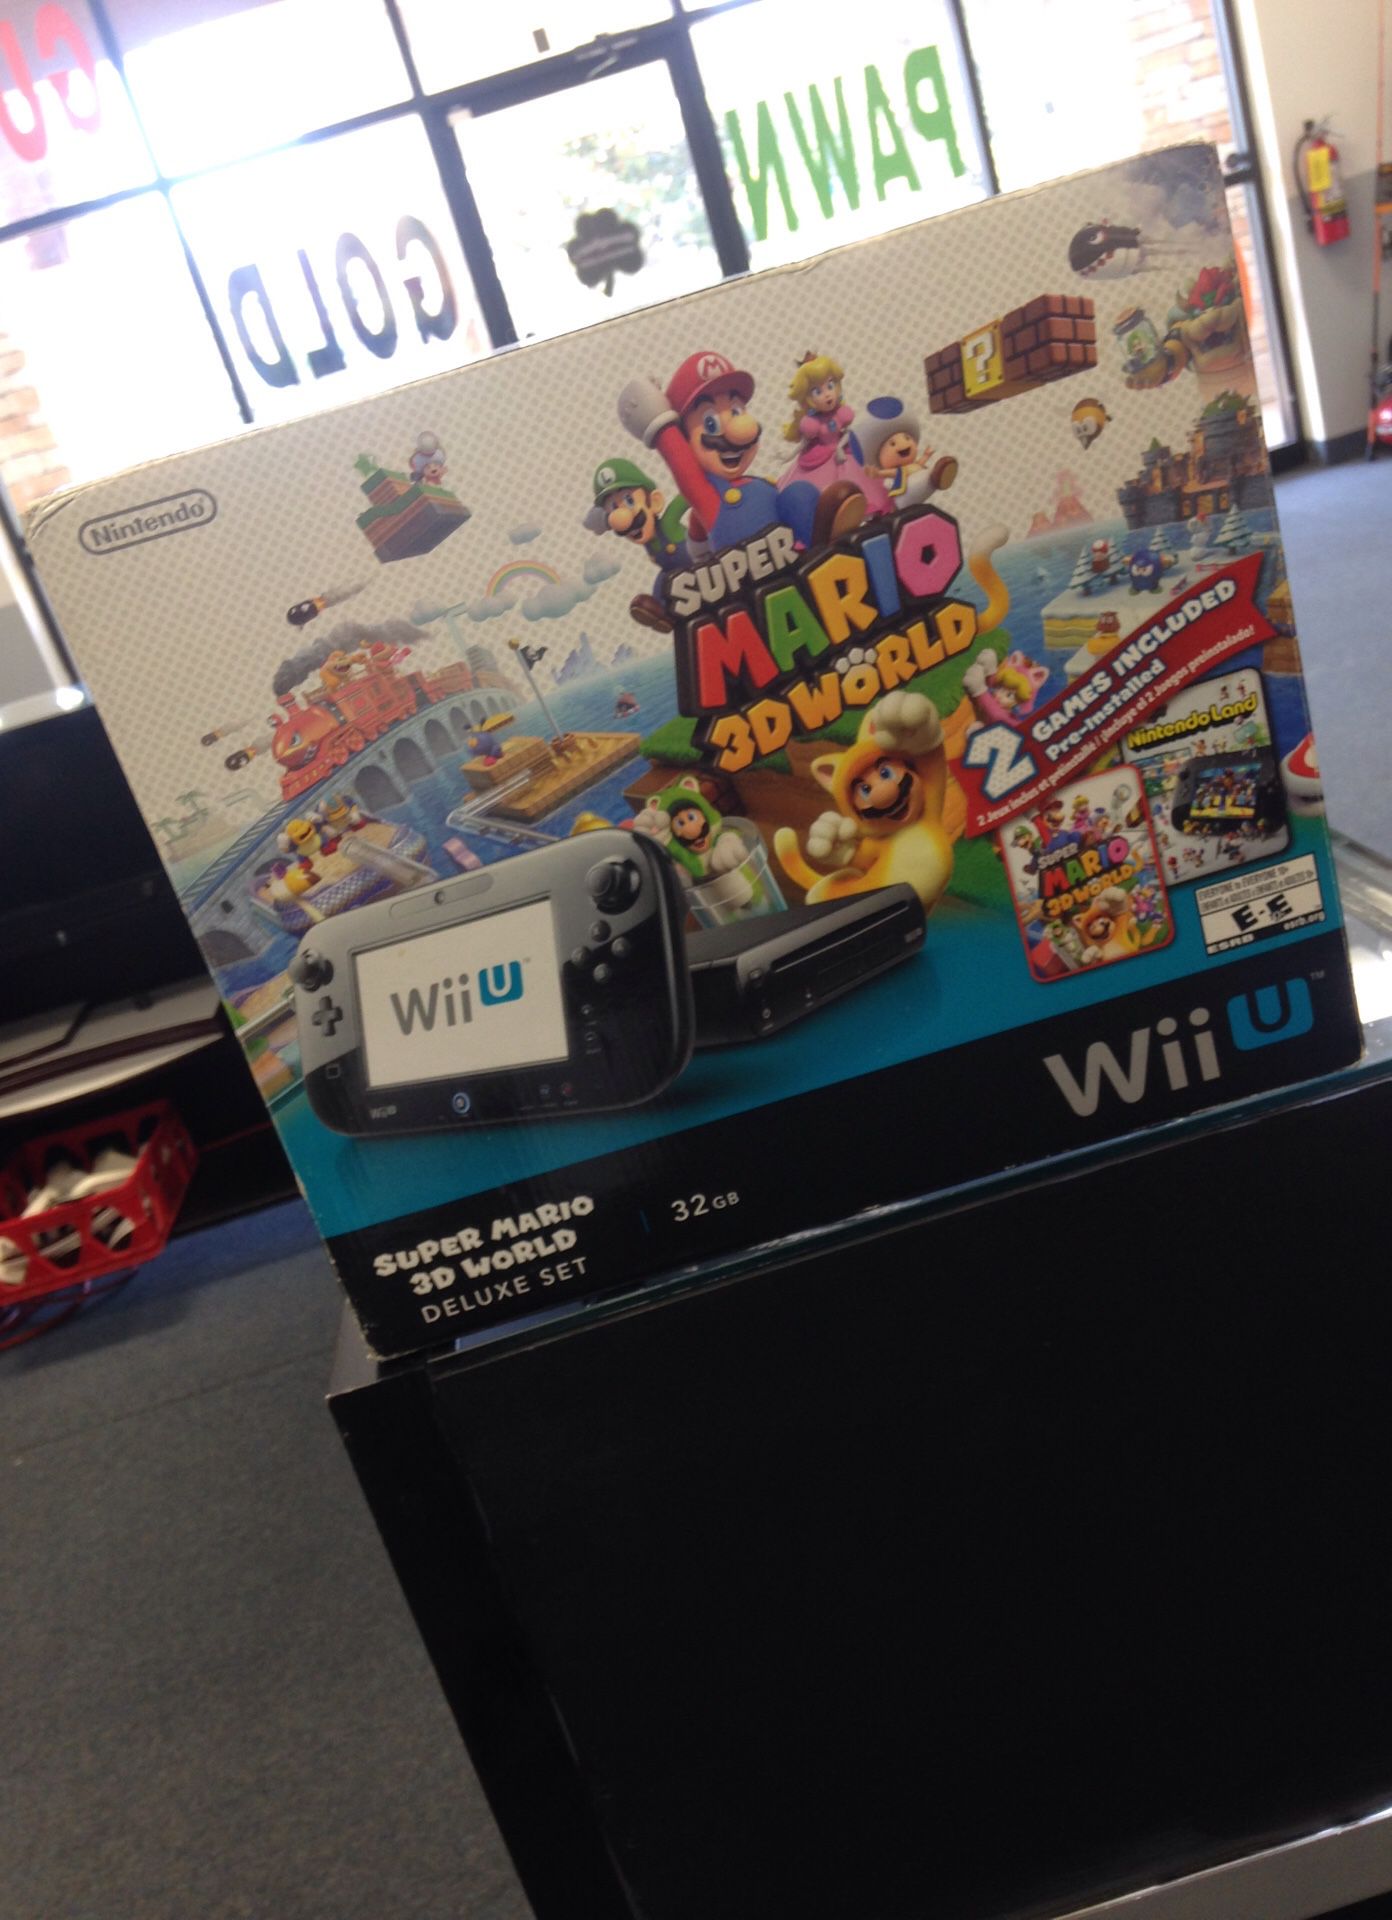 Super Mario world Nintendo Wii U in box